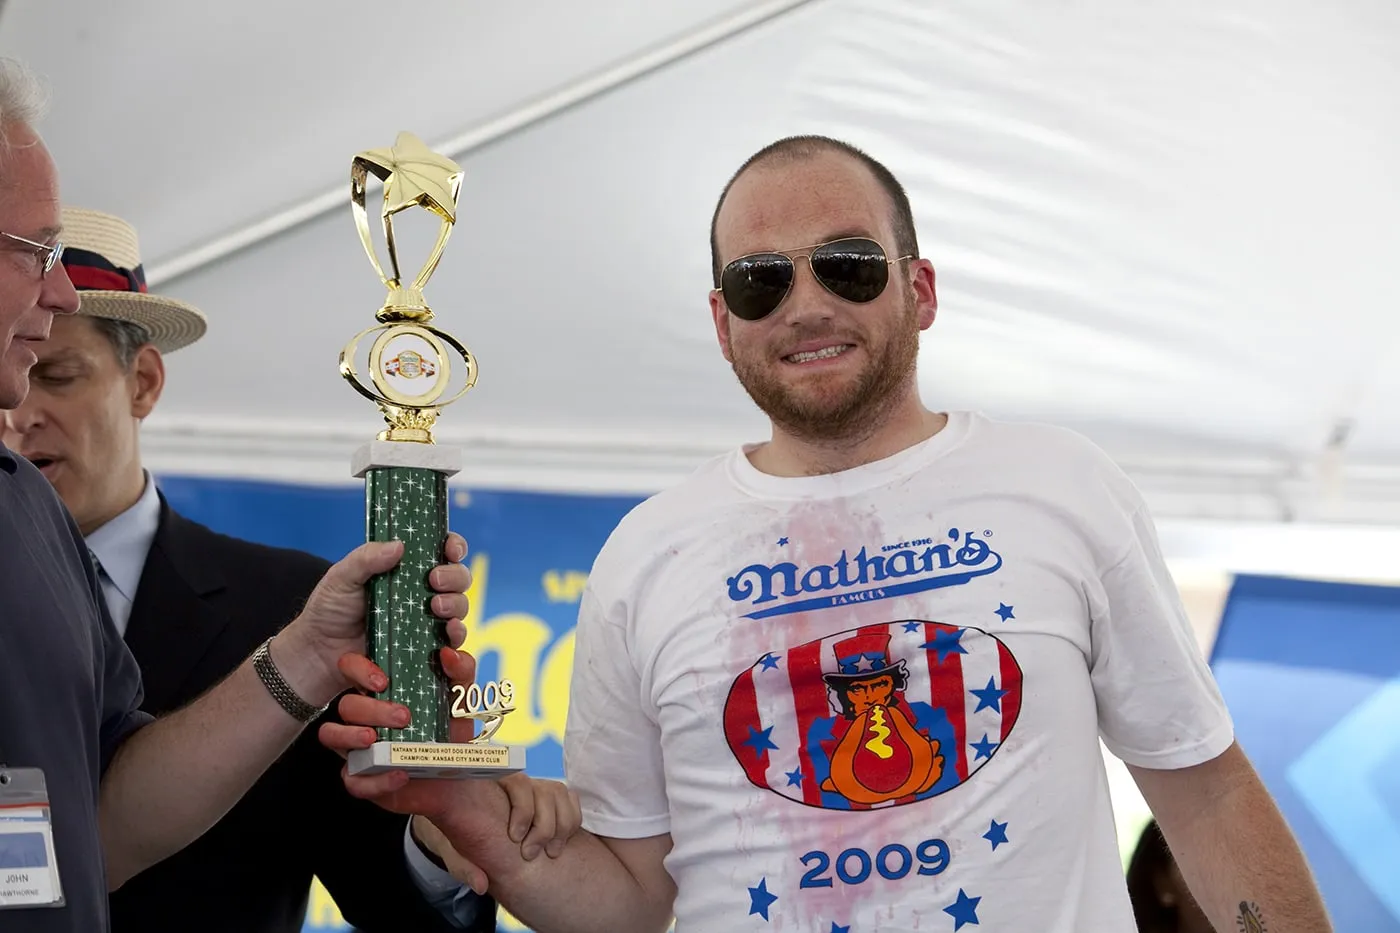 Tim Gravy Brown wins the Hot Dog Eating Qualifying Contest in Kansas City, Missouri.